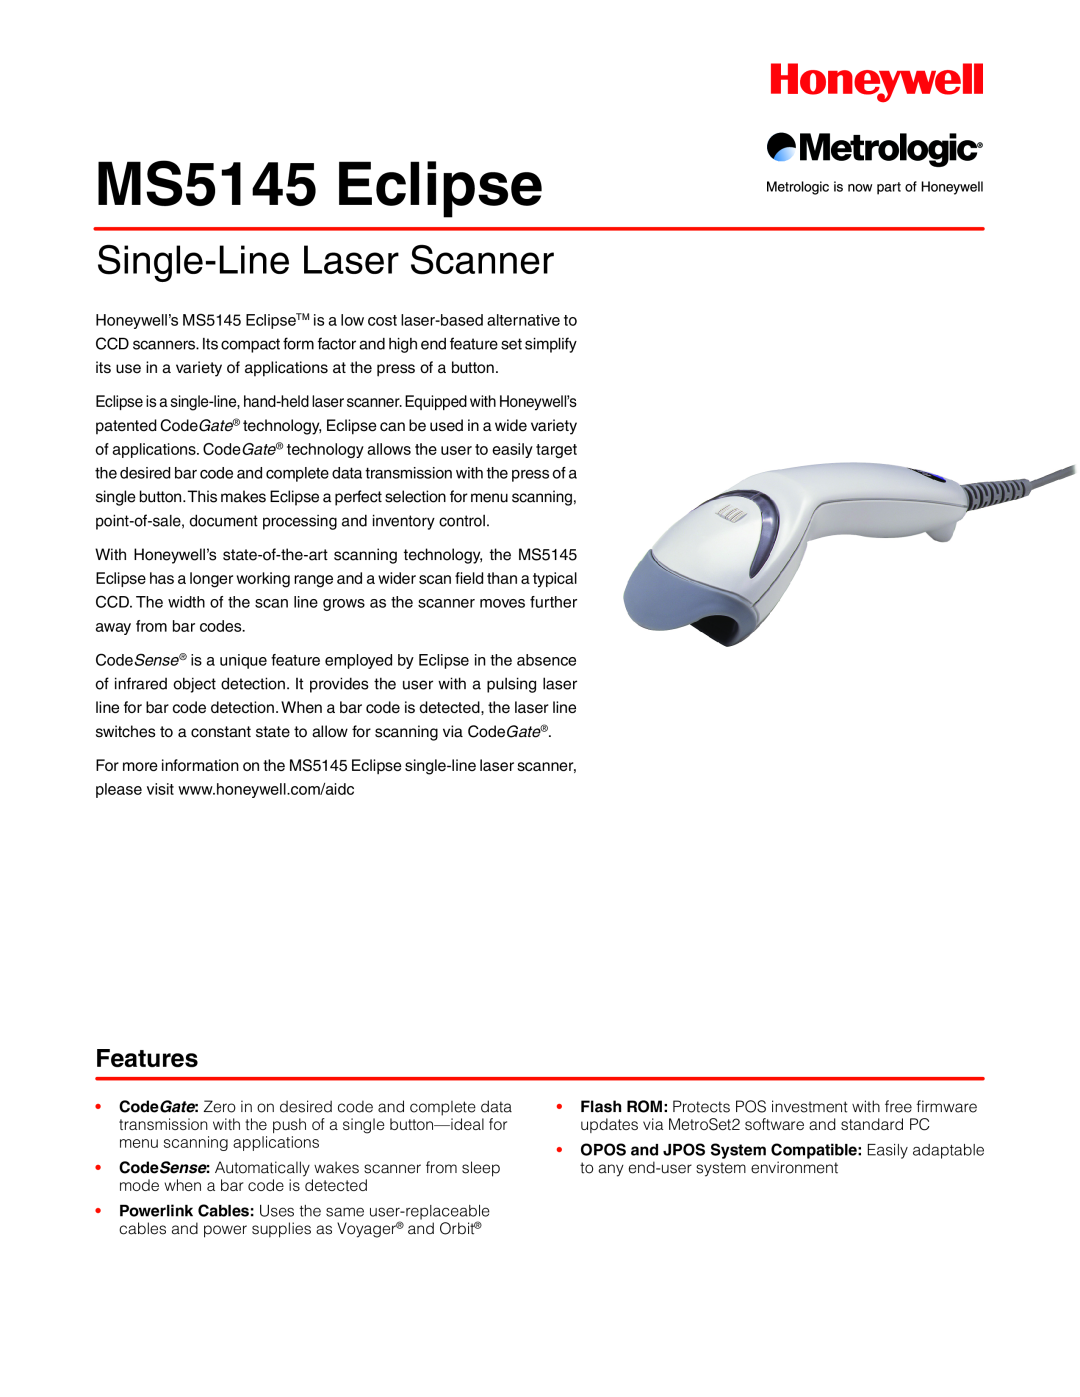 Metrologic Instruments MS 5145 manual MS5145 Eclipse, Single-Line Laser Scanner, Features 